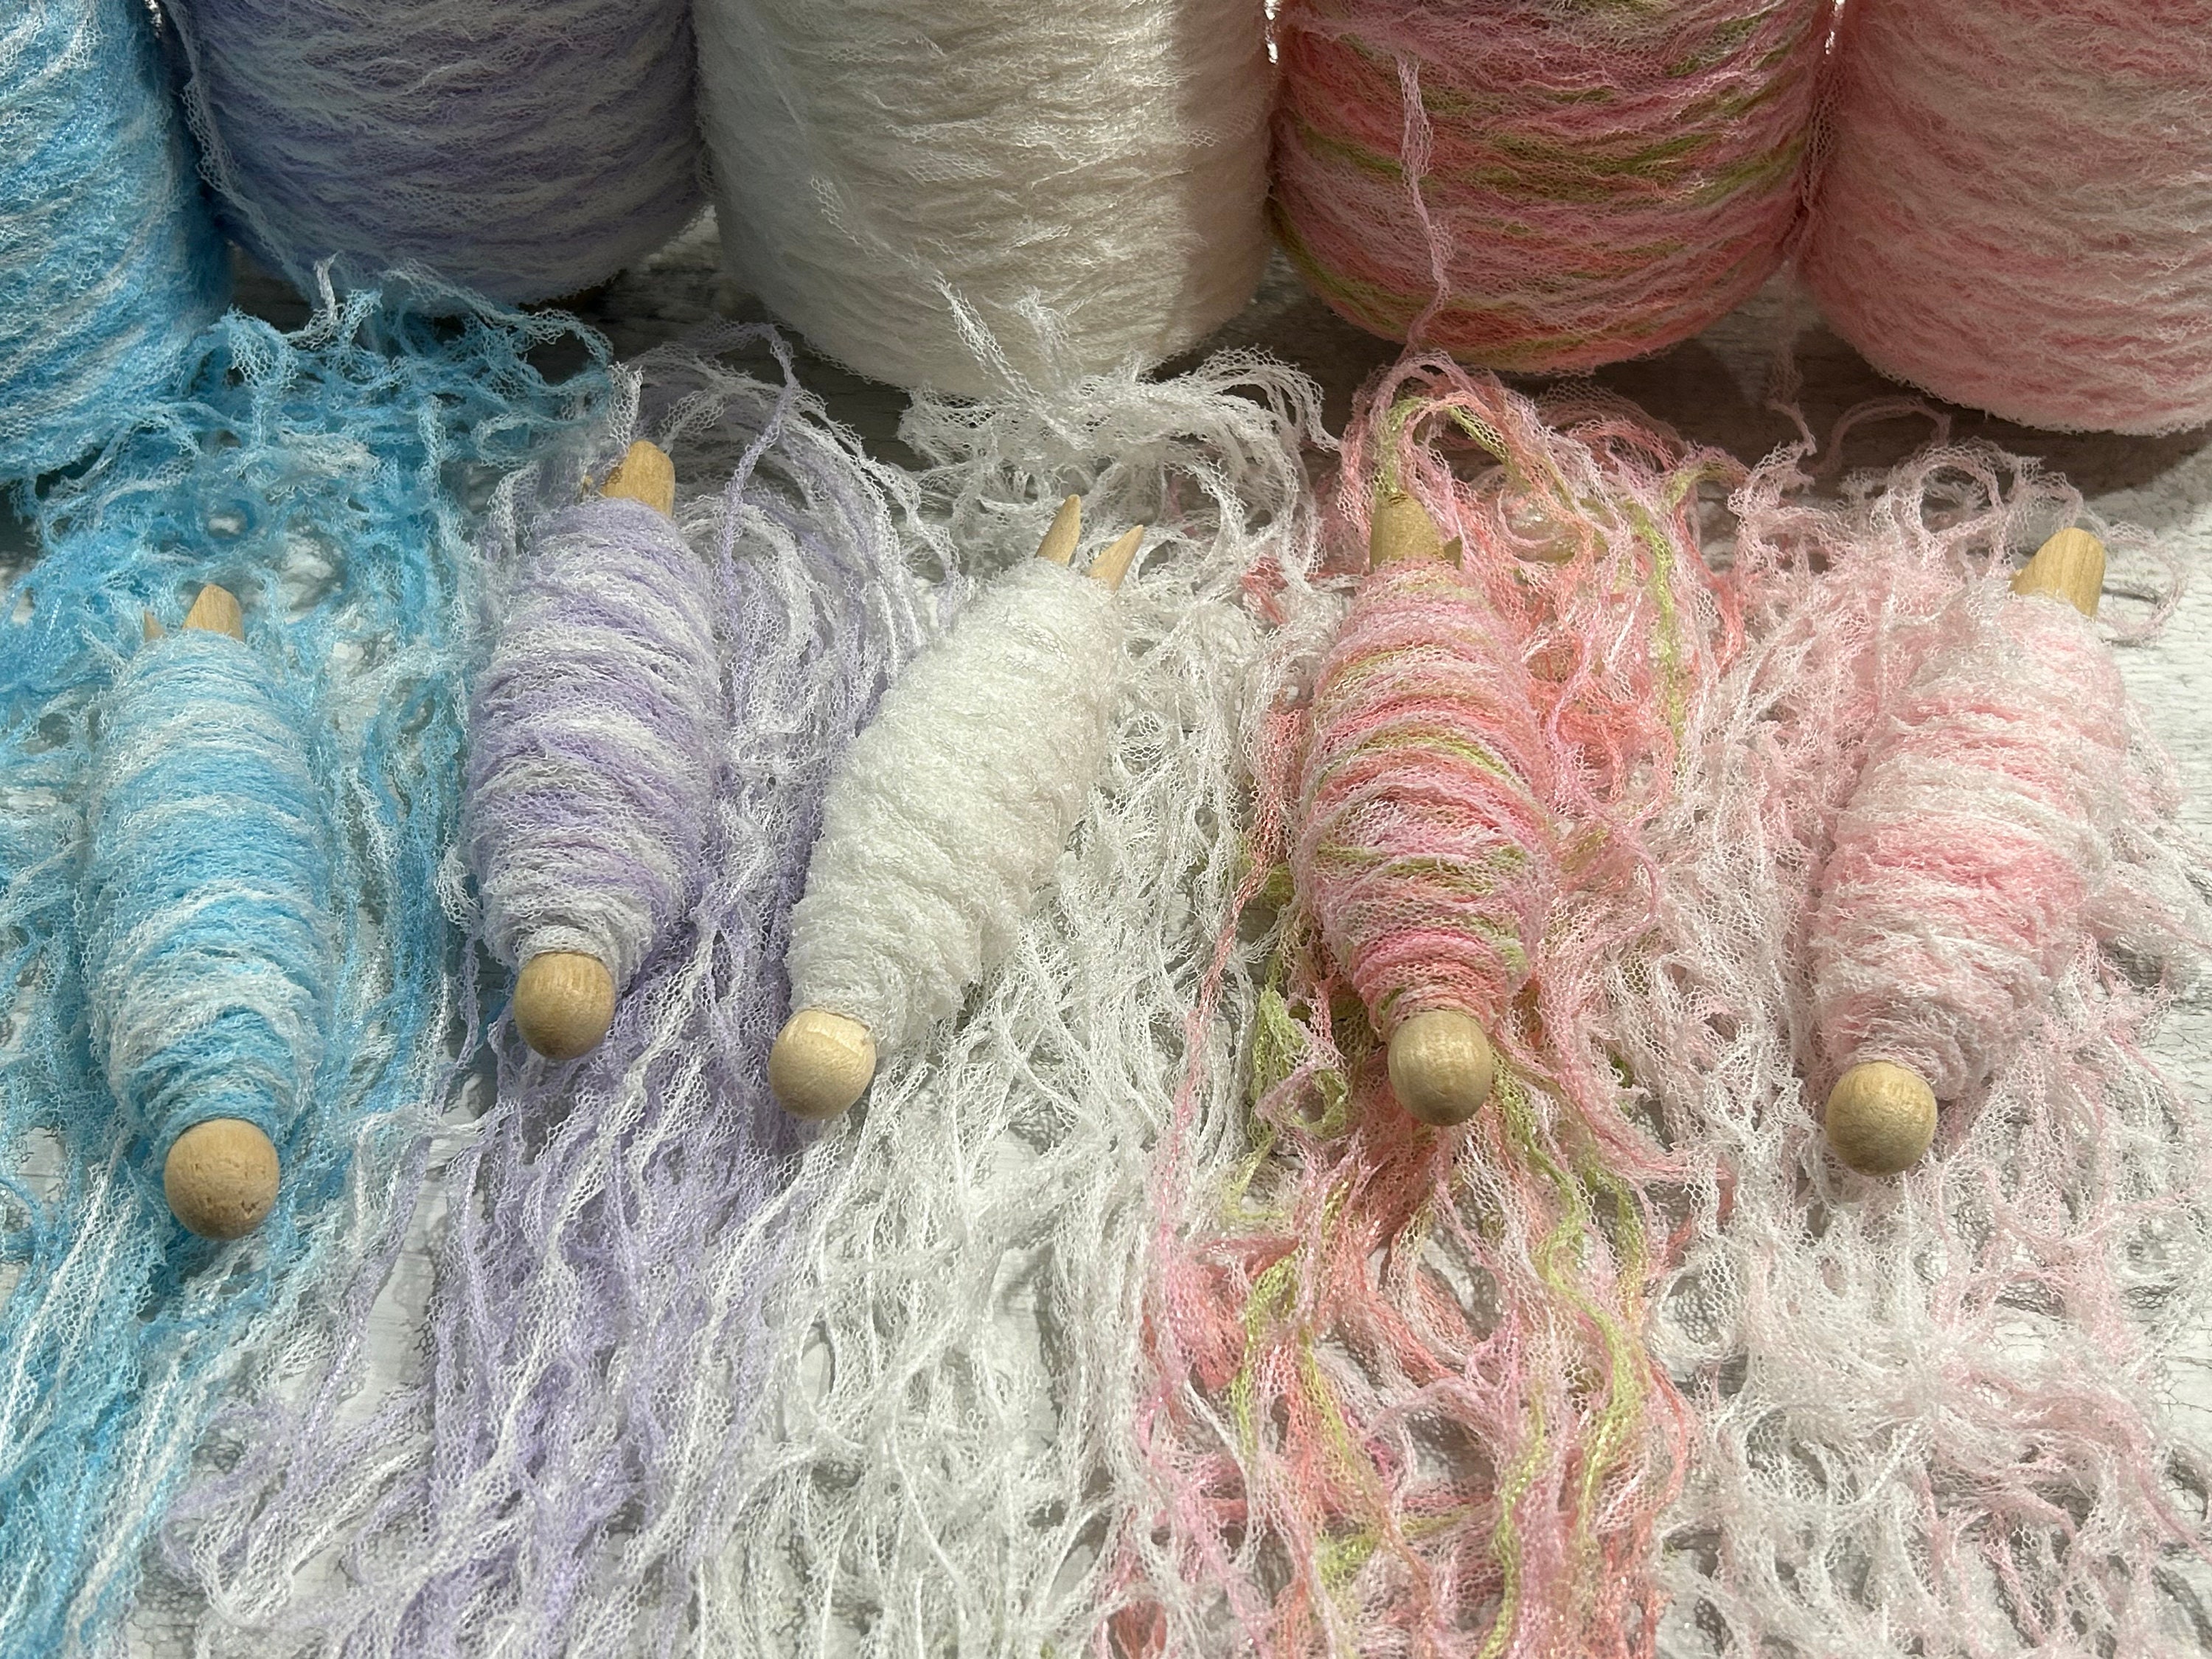 Unicorn Yarn Pack Pastel Tones Yarn Knitting Wool Yarn 